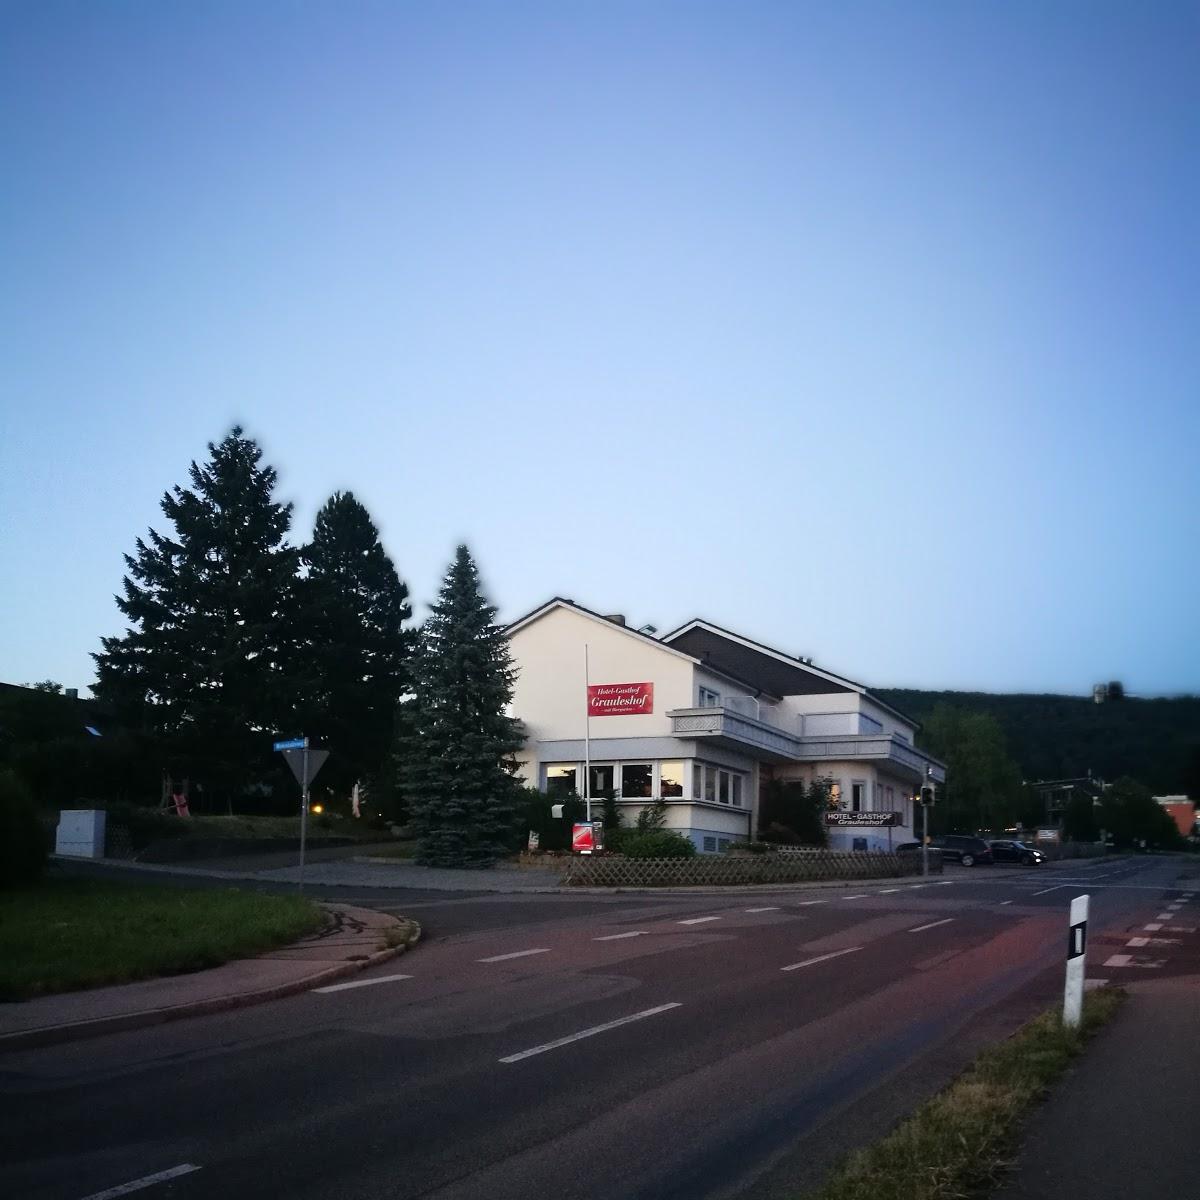 Restaurant "Hotel Grauleshof" in Aalen